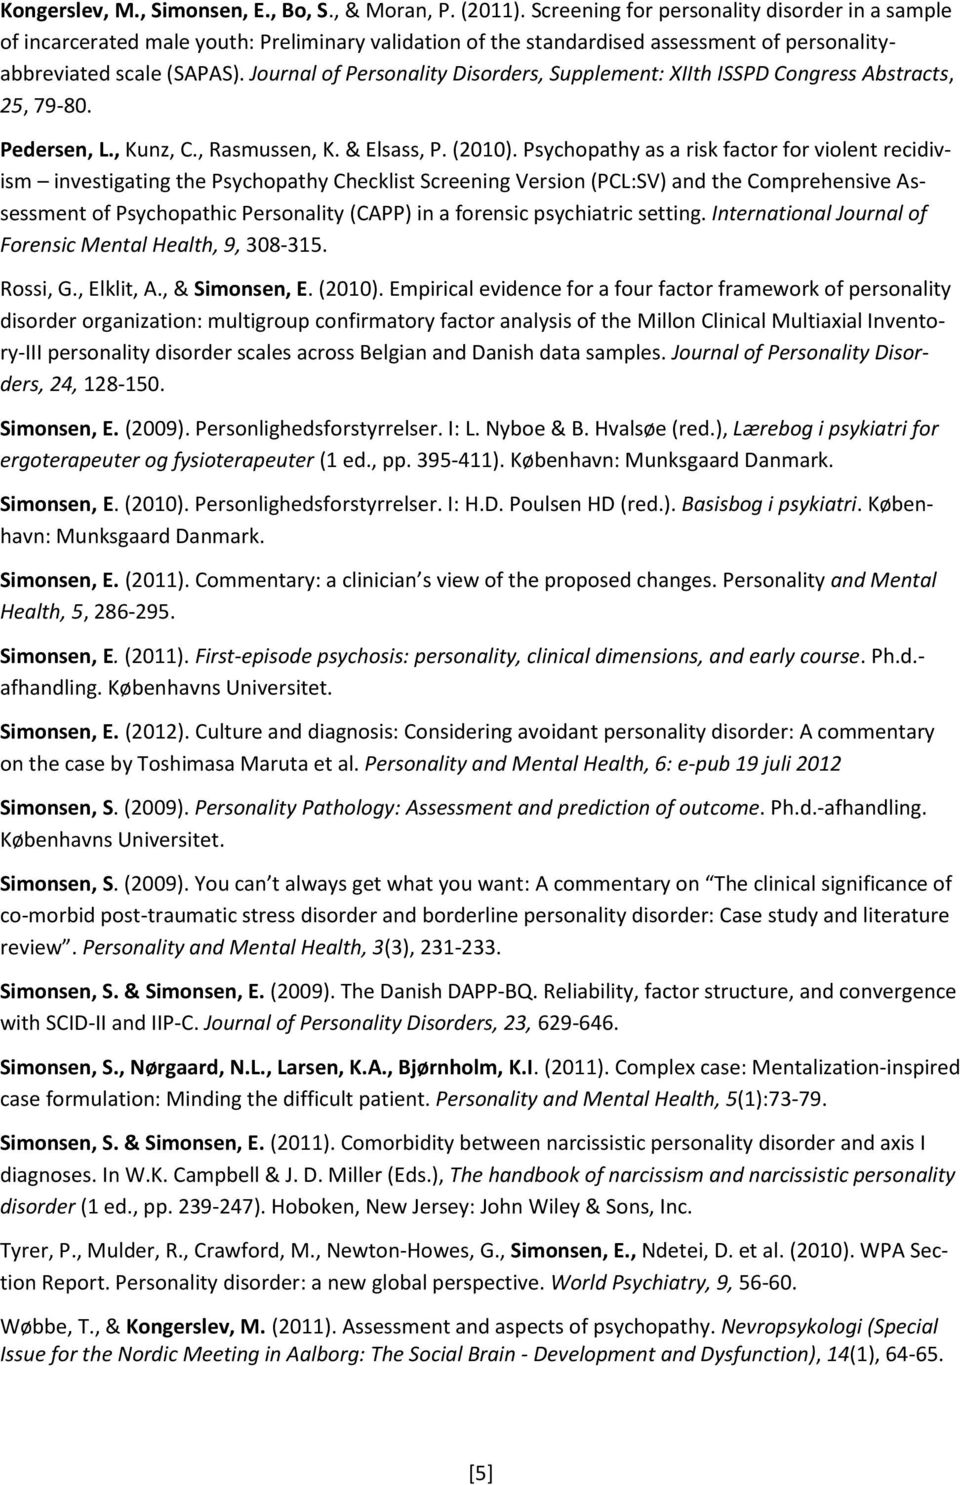 Journal of Personality Disorders, Supplement: XIIth ISSPD Congress Abstracts, 25, 79-80. Pedersen, L., Kunz, C., Rasmussen, K. & Elsass, P. (2010).